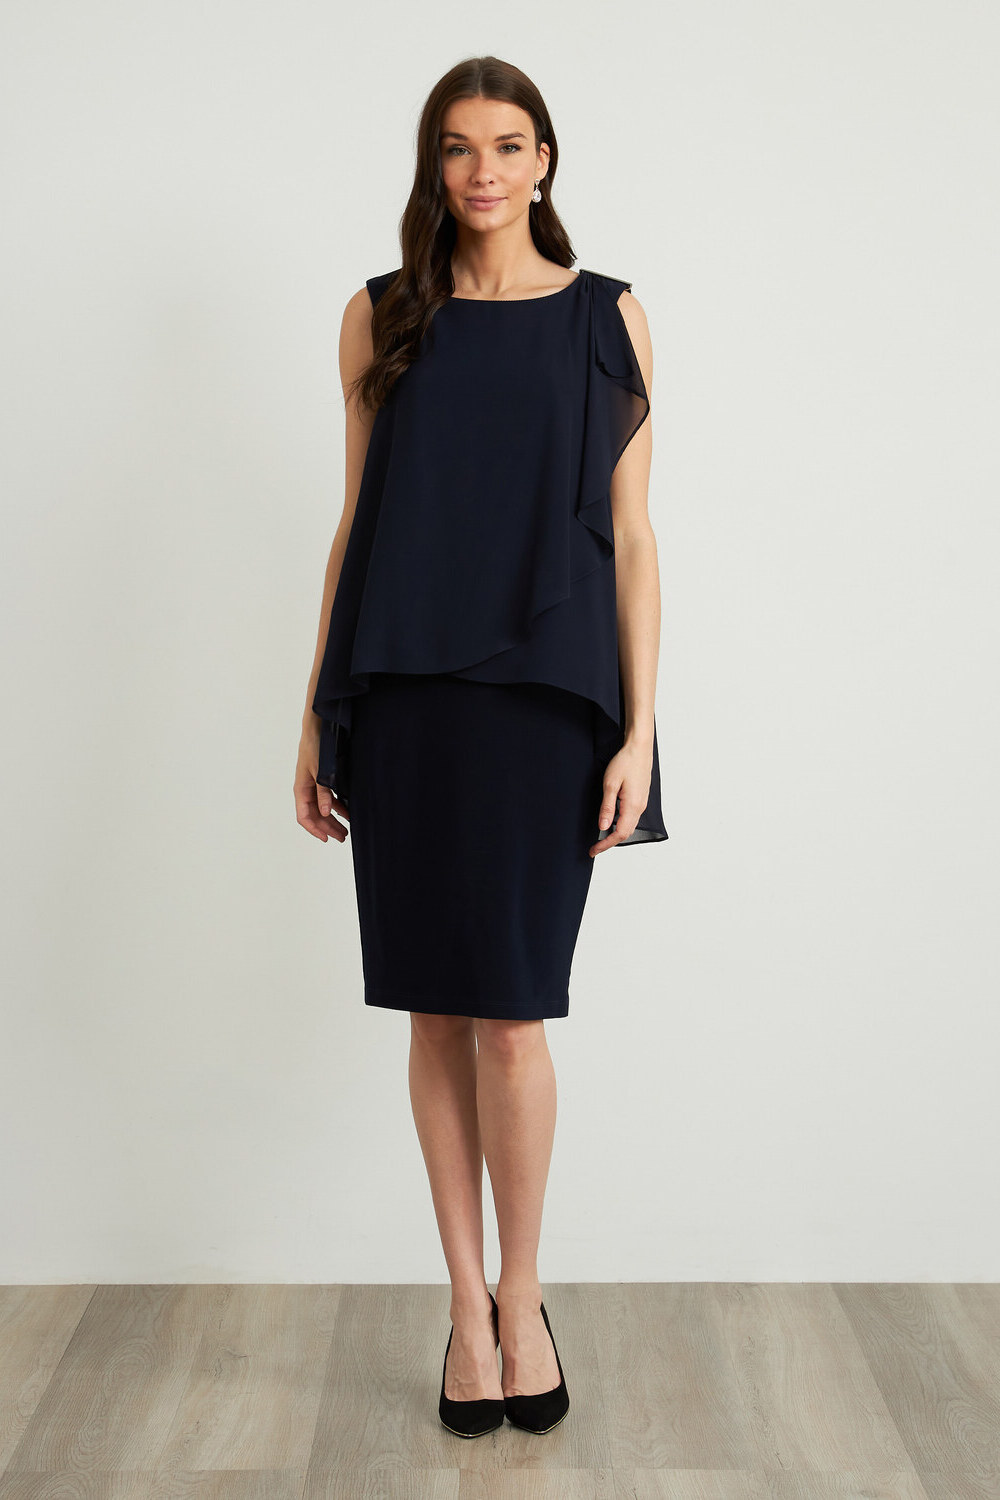 Joseph Ribkoff Sheer Sleeveless Dress Style 212057. Midnight Blue